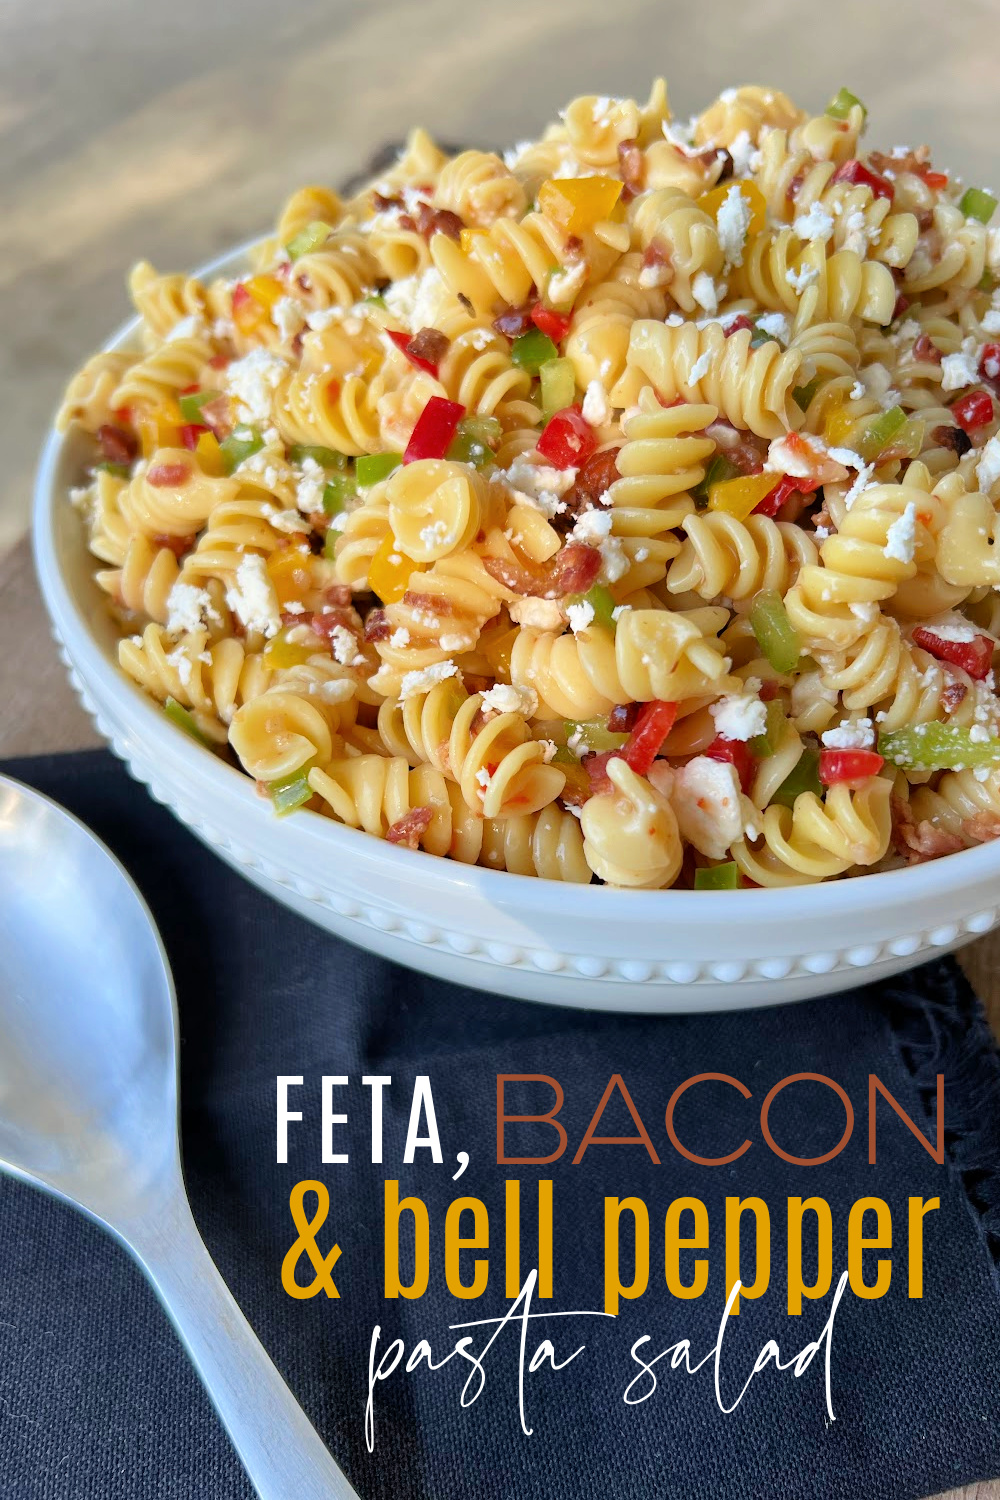 Pinnable Pinterest image of the Feta, Bacon & Bell Pepper Pasta Salad.